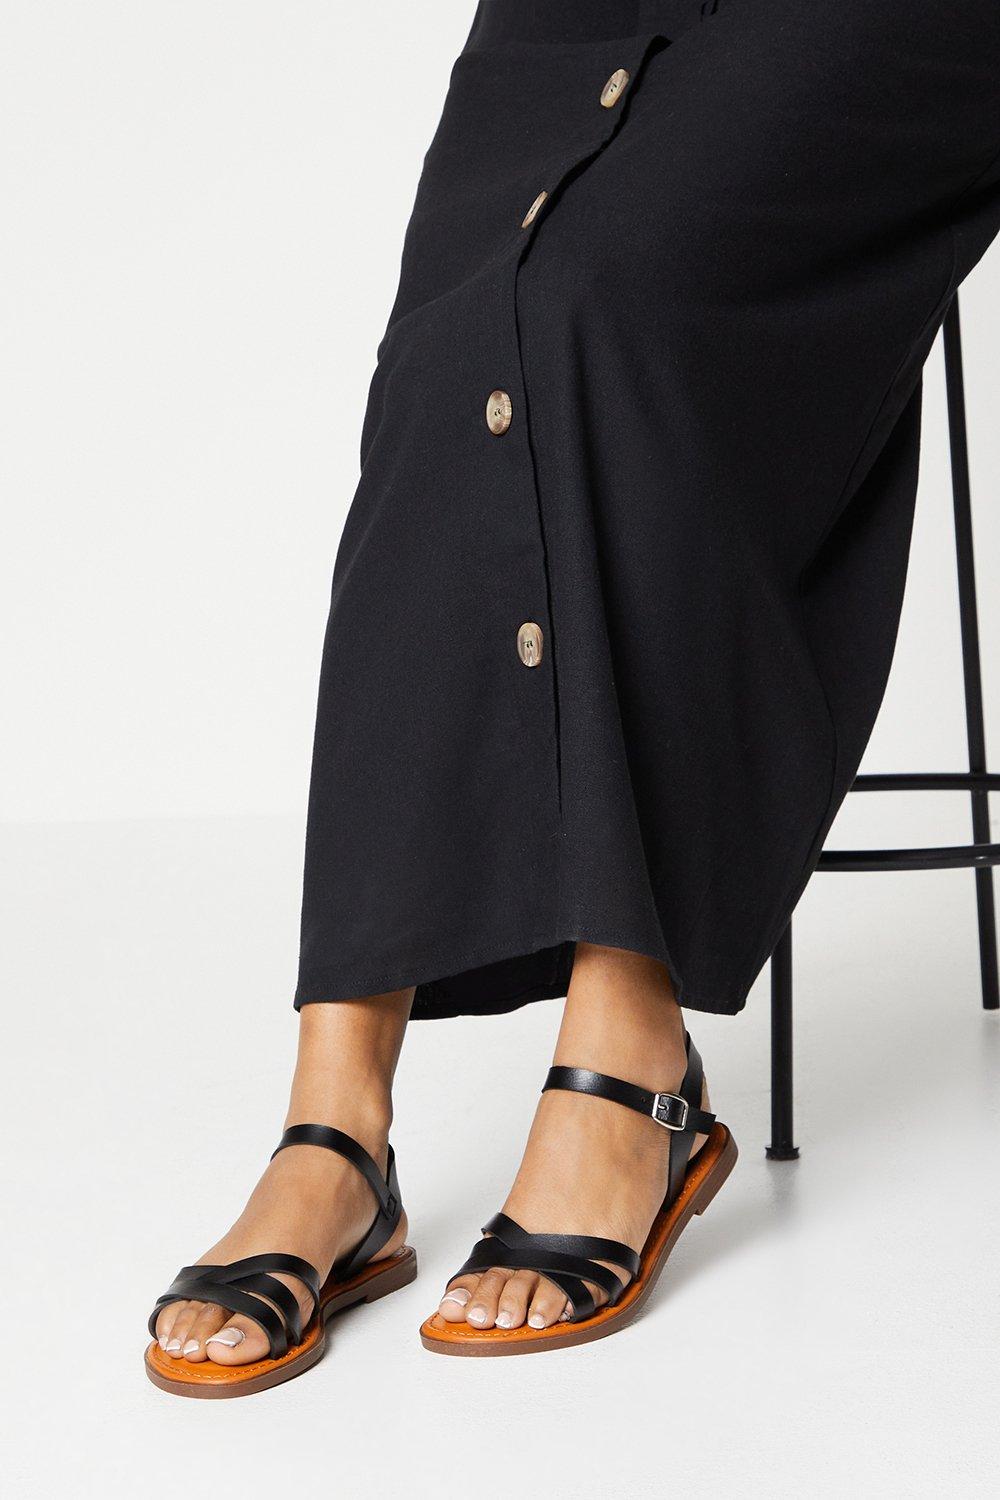 Women’s Good For The Sole: Melanie Comfort Cross Strap Flat Sandals - black - 8